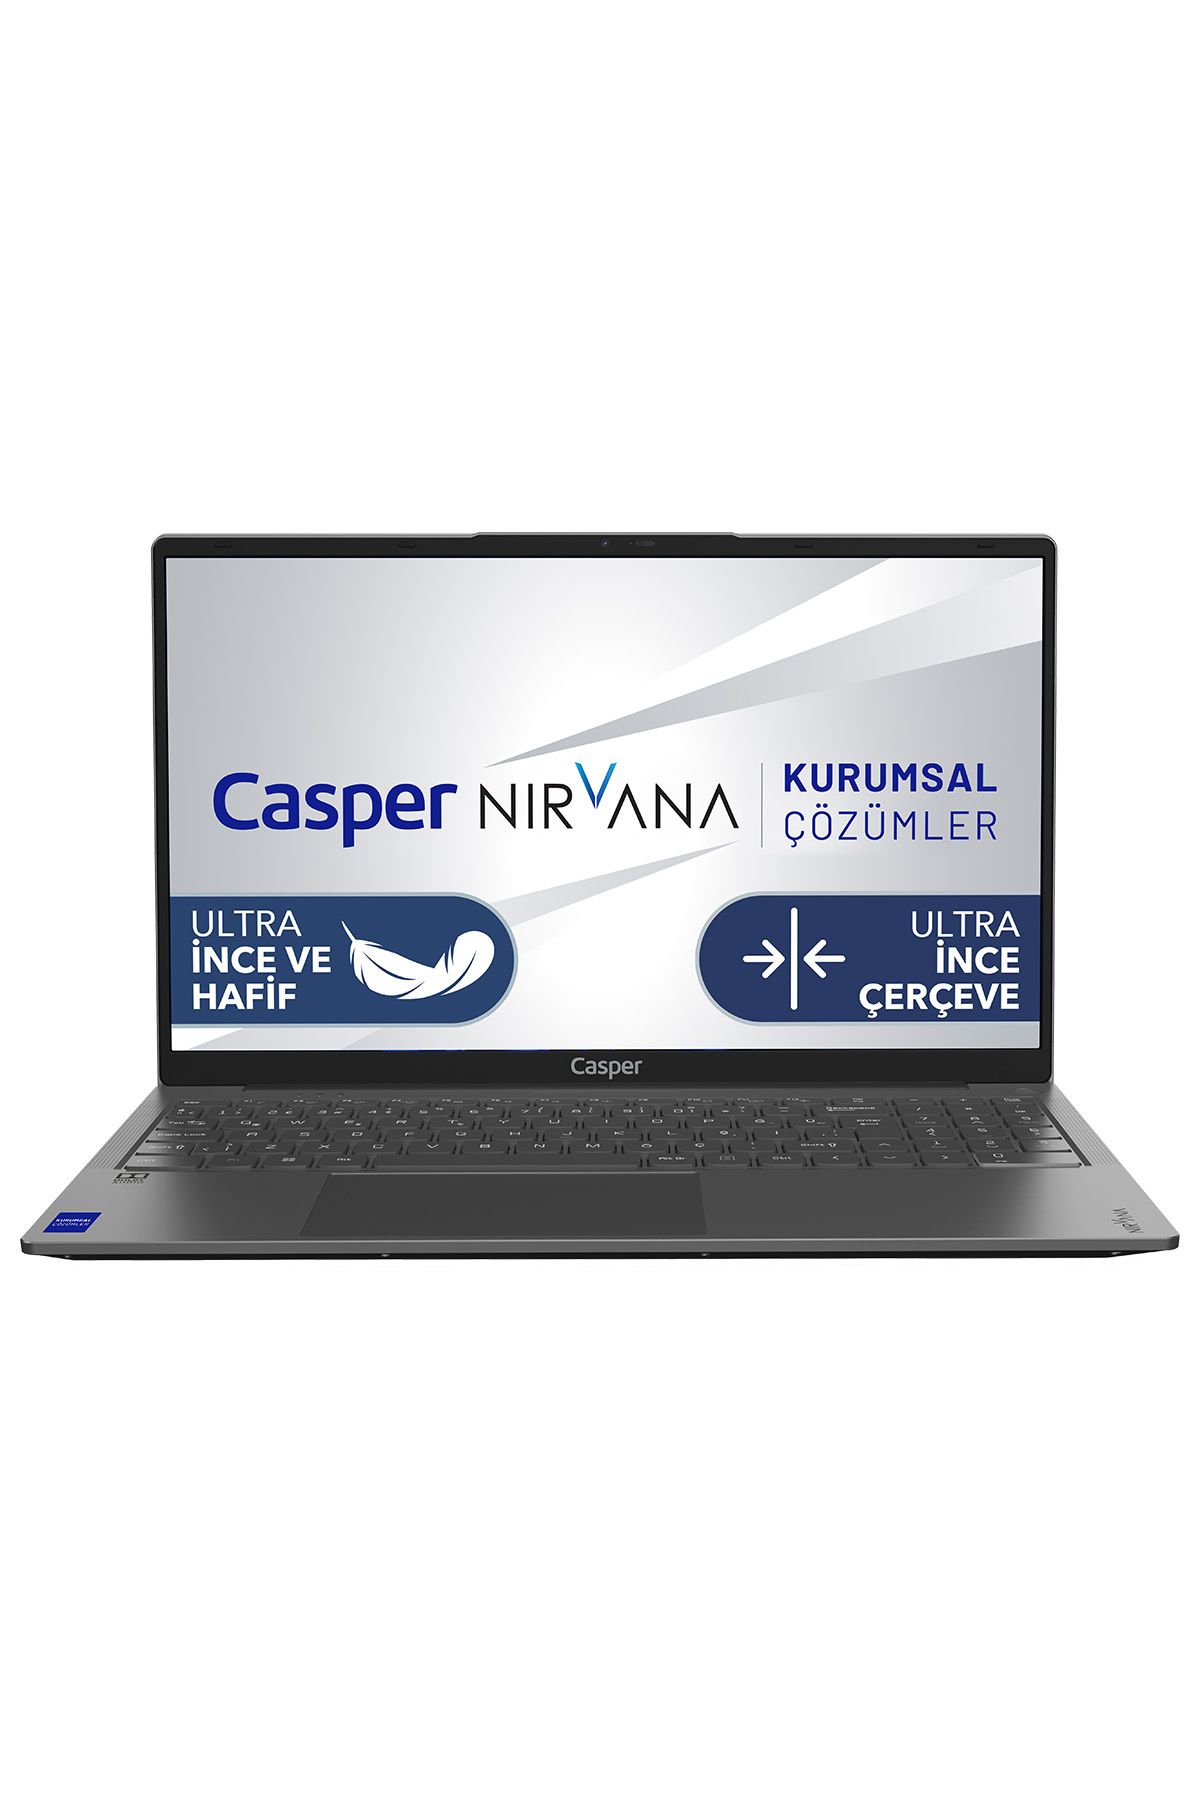 Casper Nirvana X700.5700-8v00x-g-f Ryzen 7-5700u 8 Gb Ram 500gb Nvme Ssd Freedos